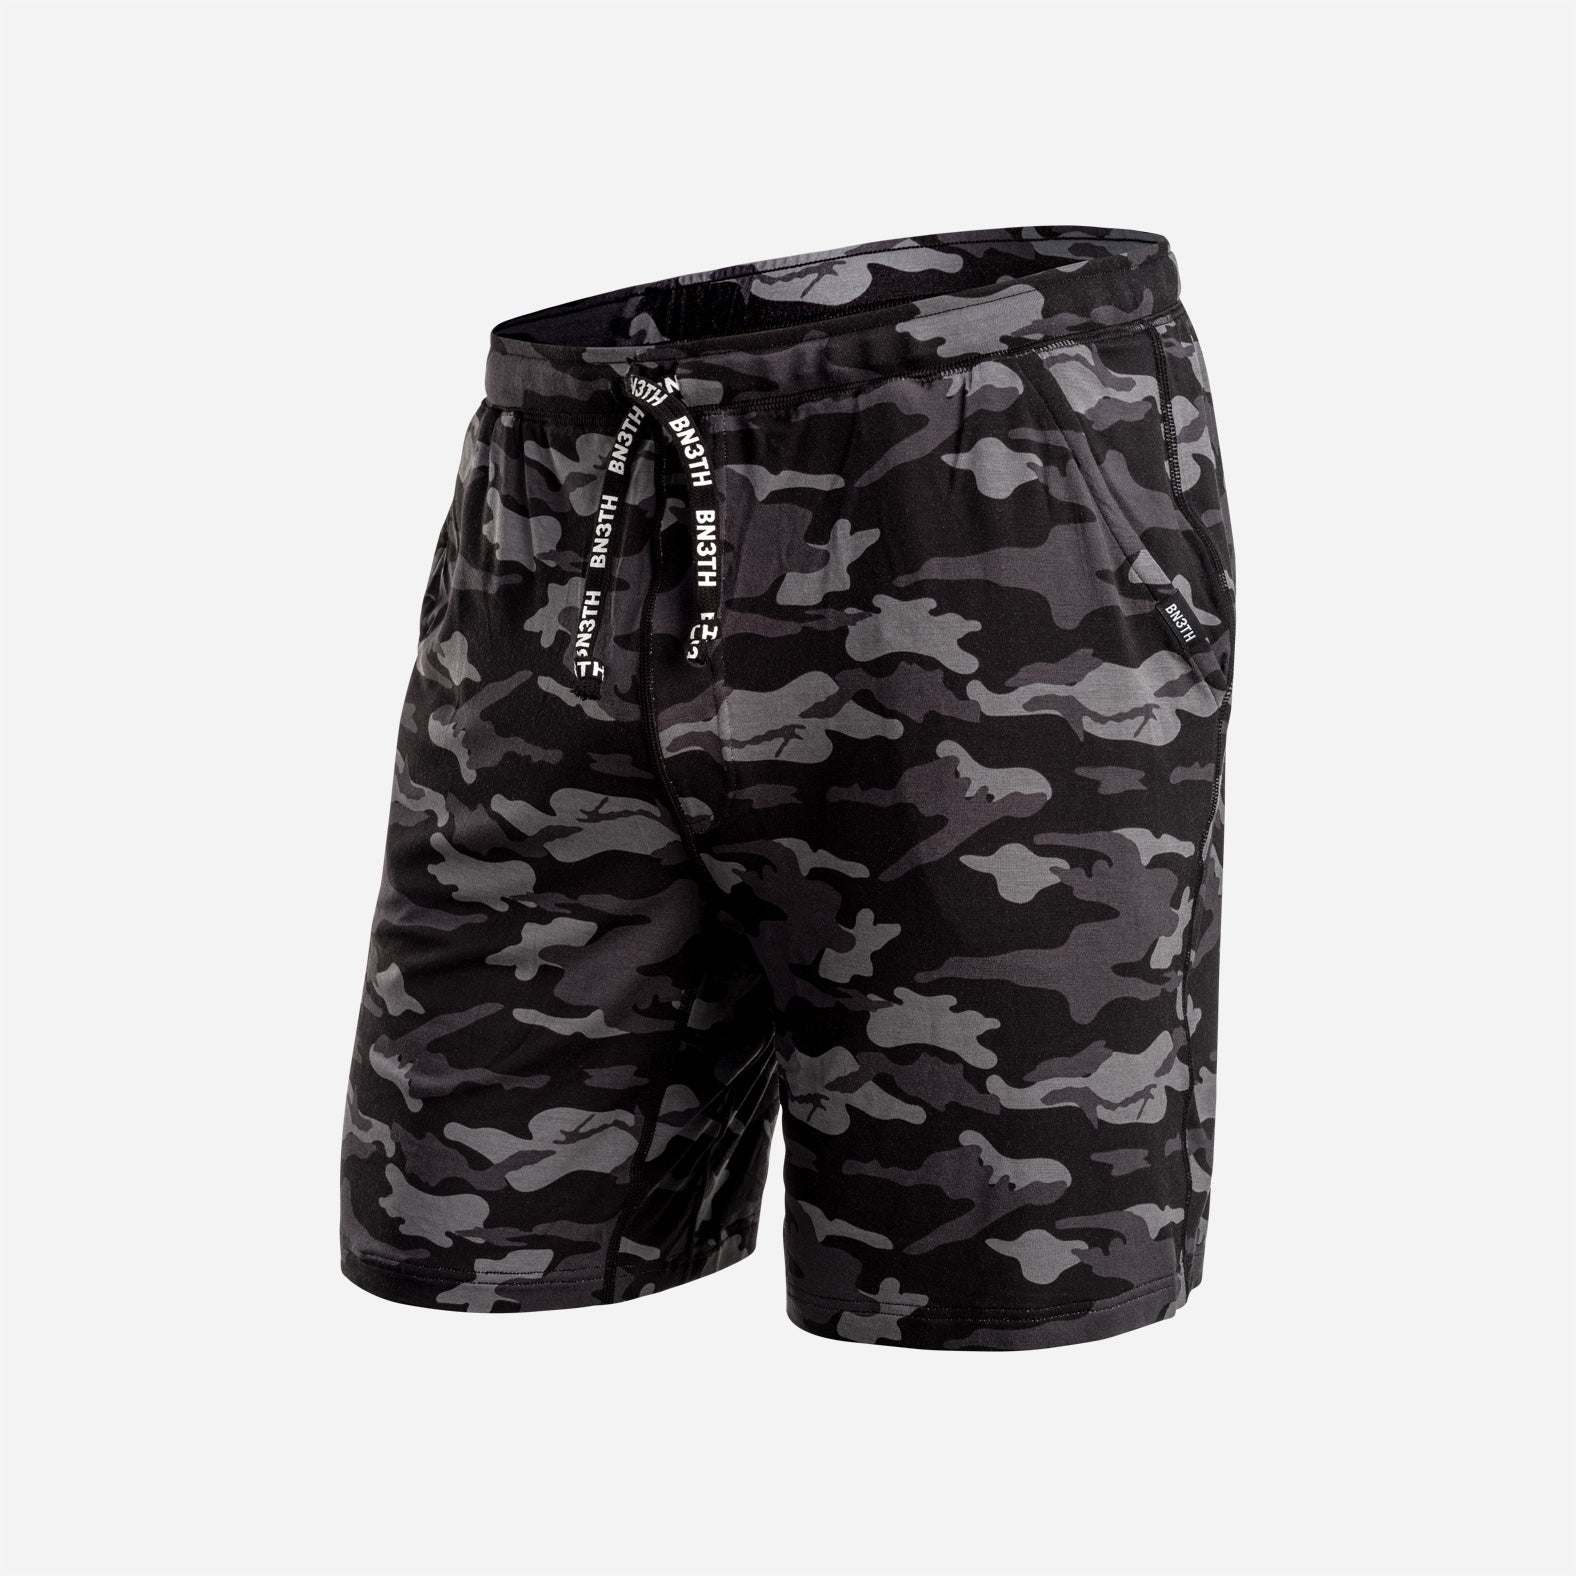 Long men's boxer shorts, cool gray, Modal Tencel™ underwear